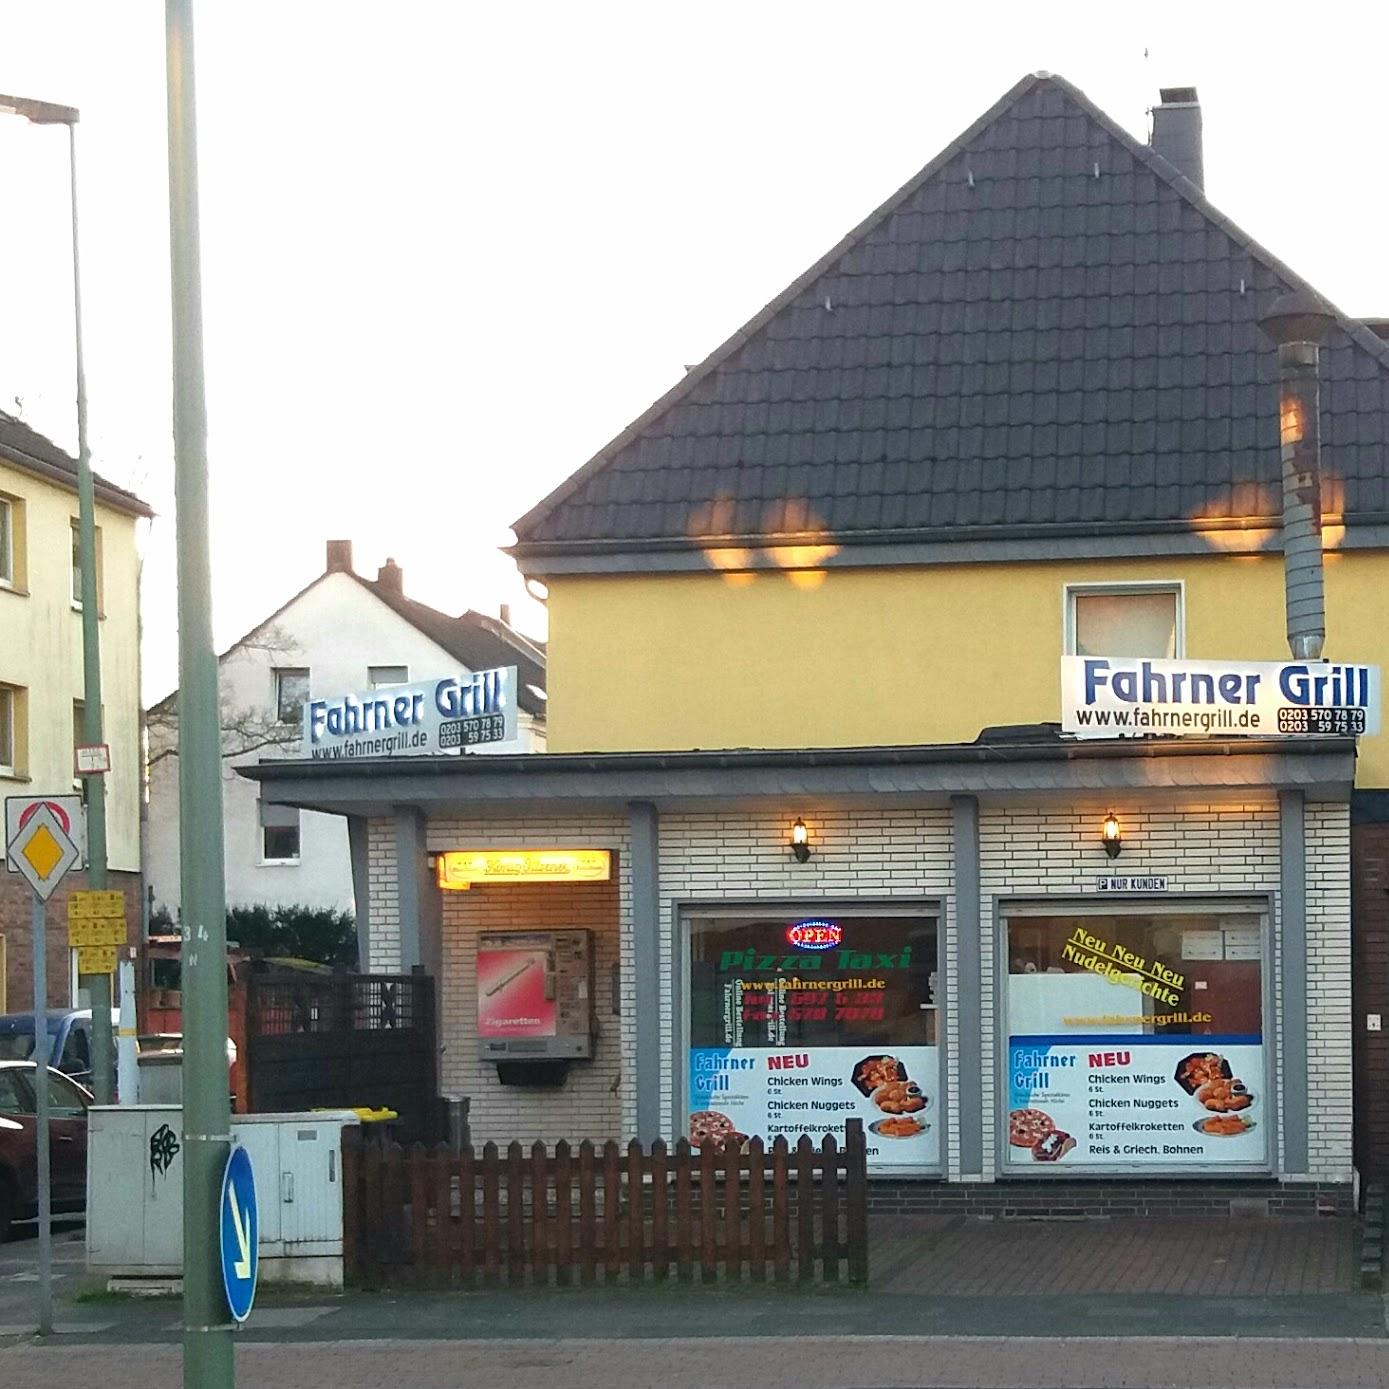 Restaurant "Fahrner Grill" in Duisburg